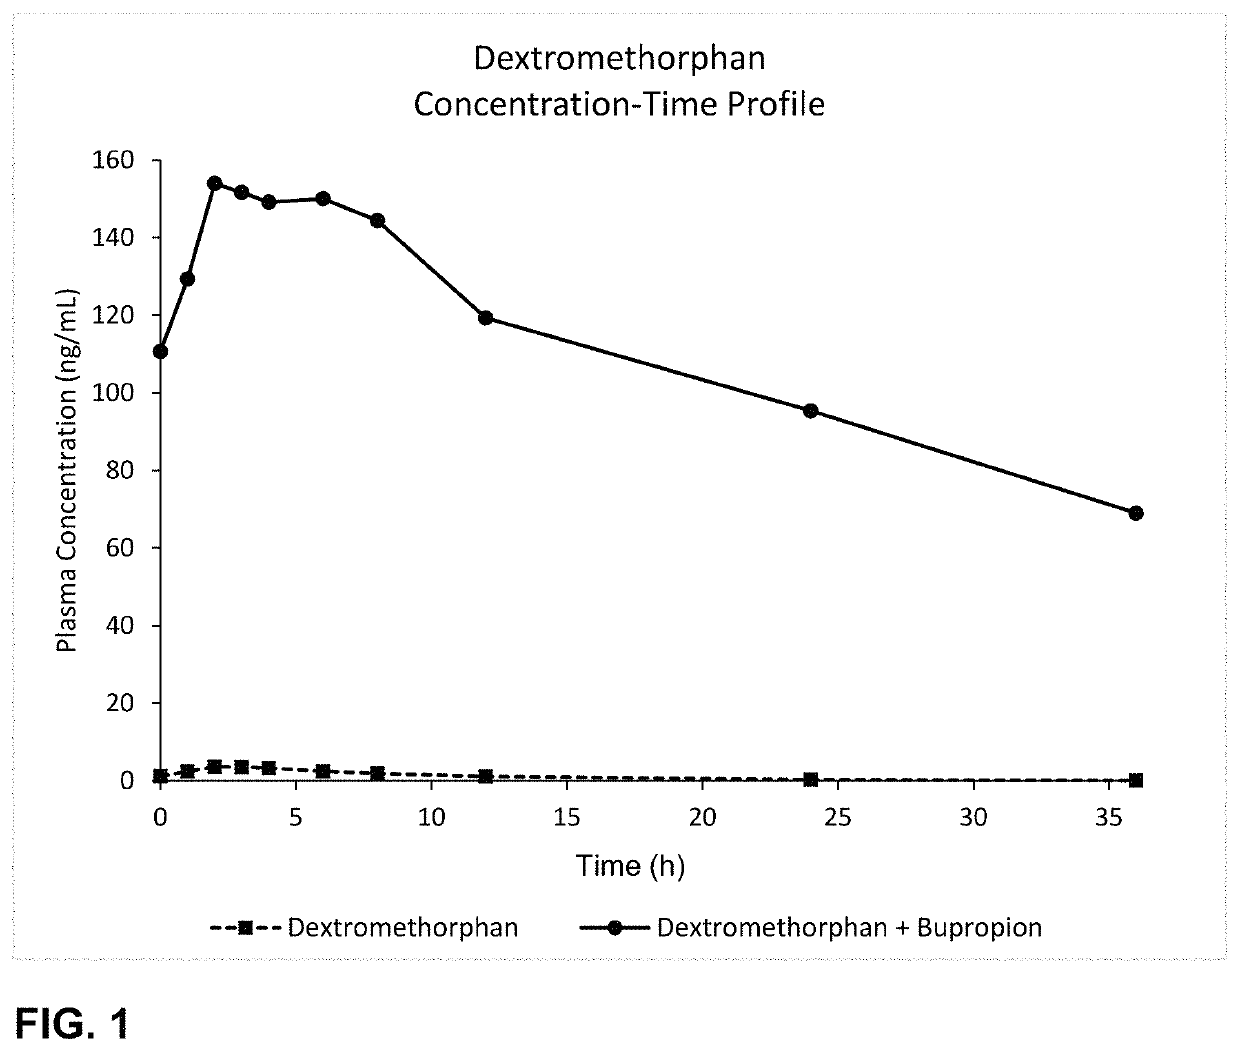 Bupropion and dextromethorphan for treating nicotine addiction